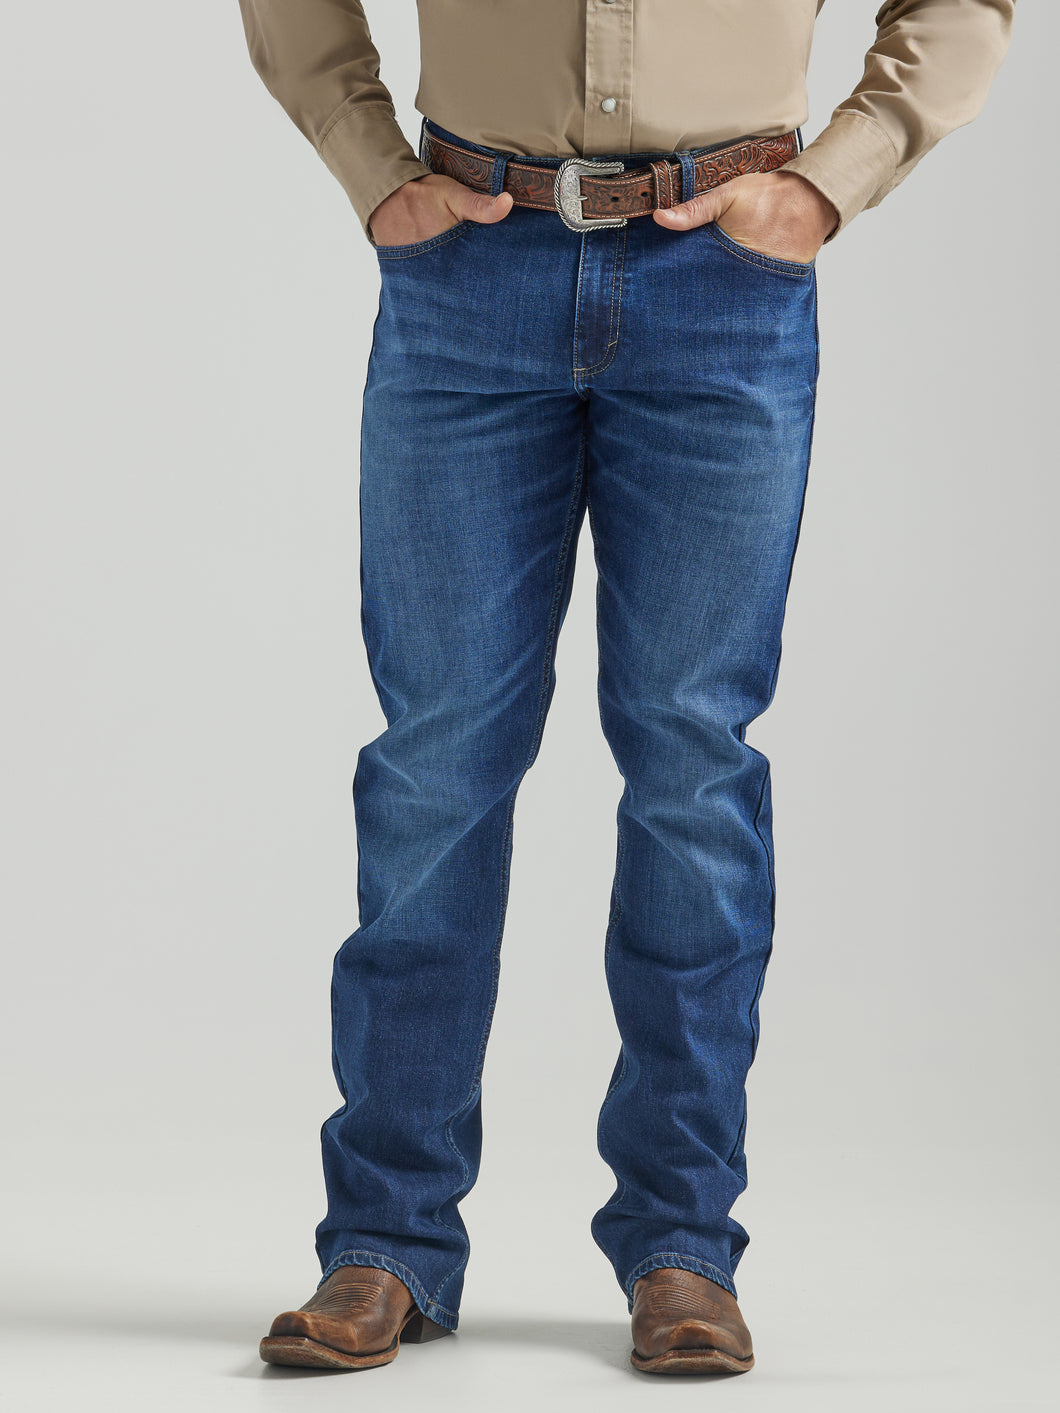 Men's Wrangler Western Boot 20X Jeans